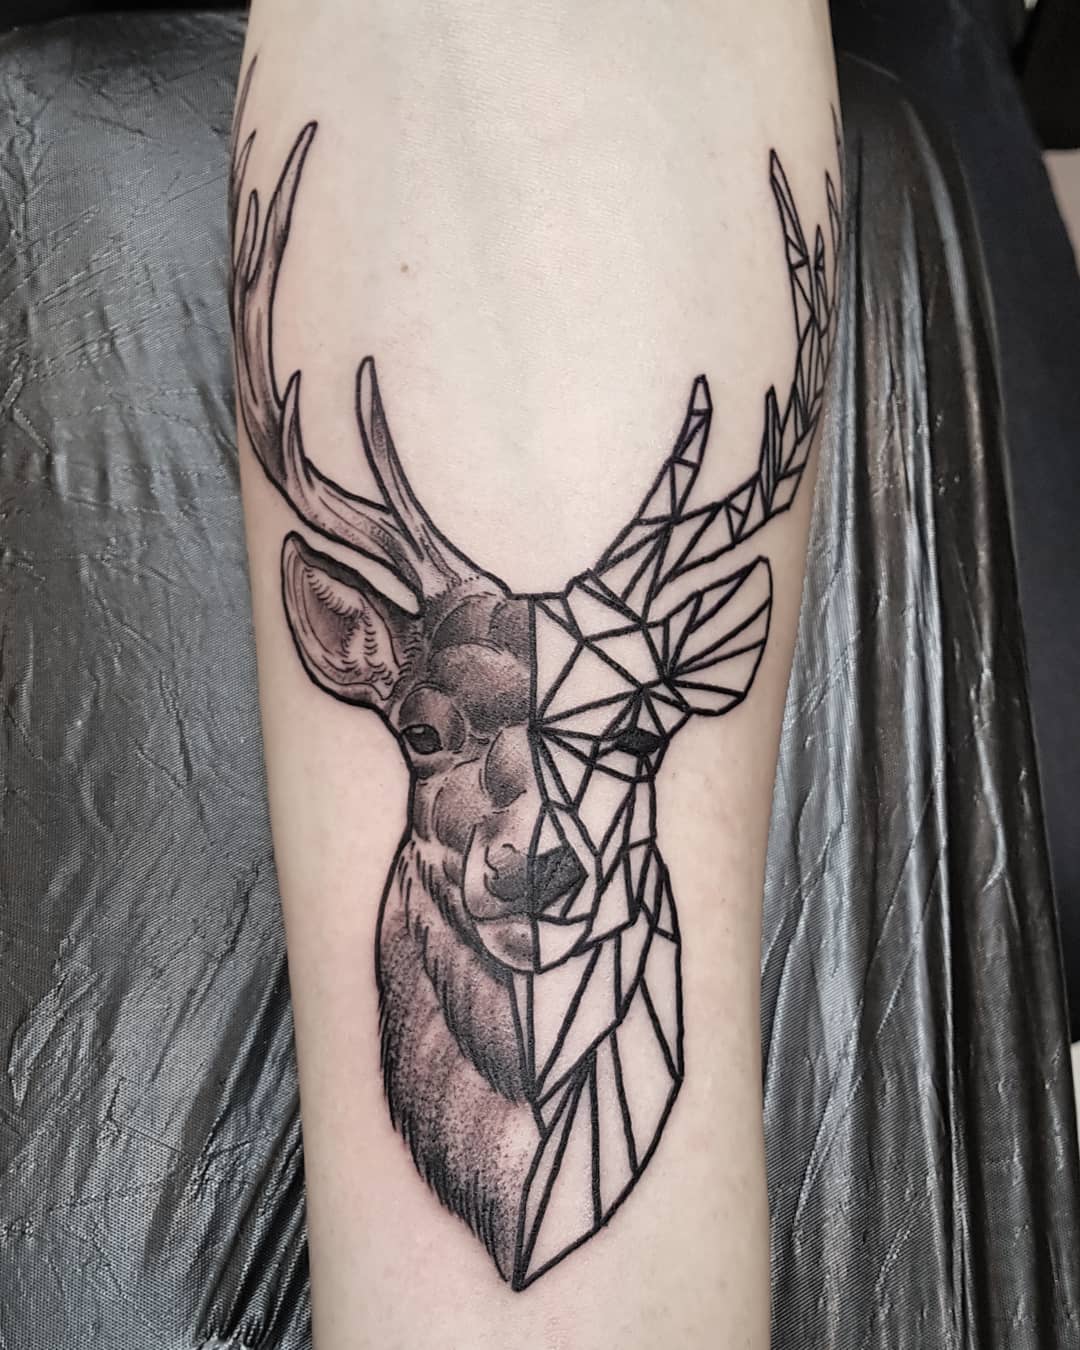 Geometry Deer Head on my man @luis.drux. Thanks Mate!
-
#tattoo #tattoos #inked